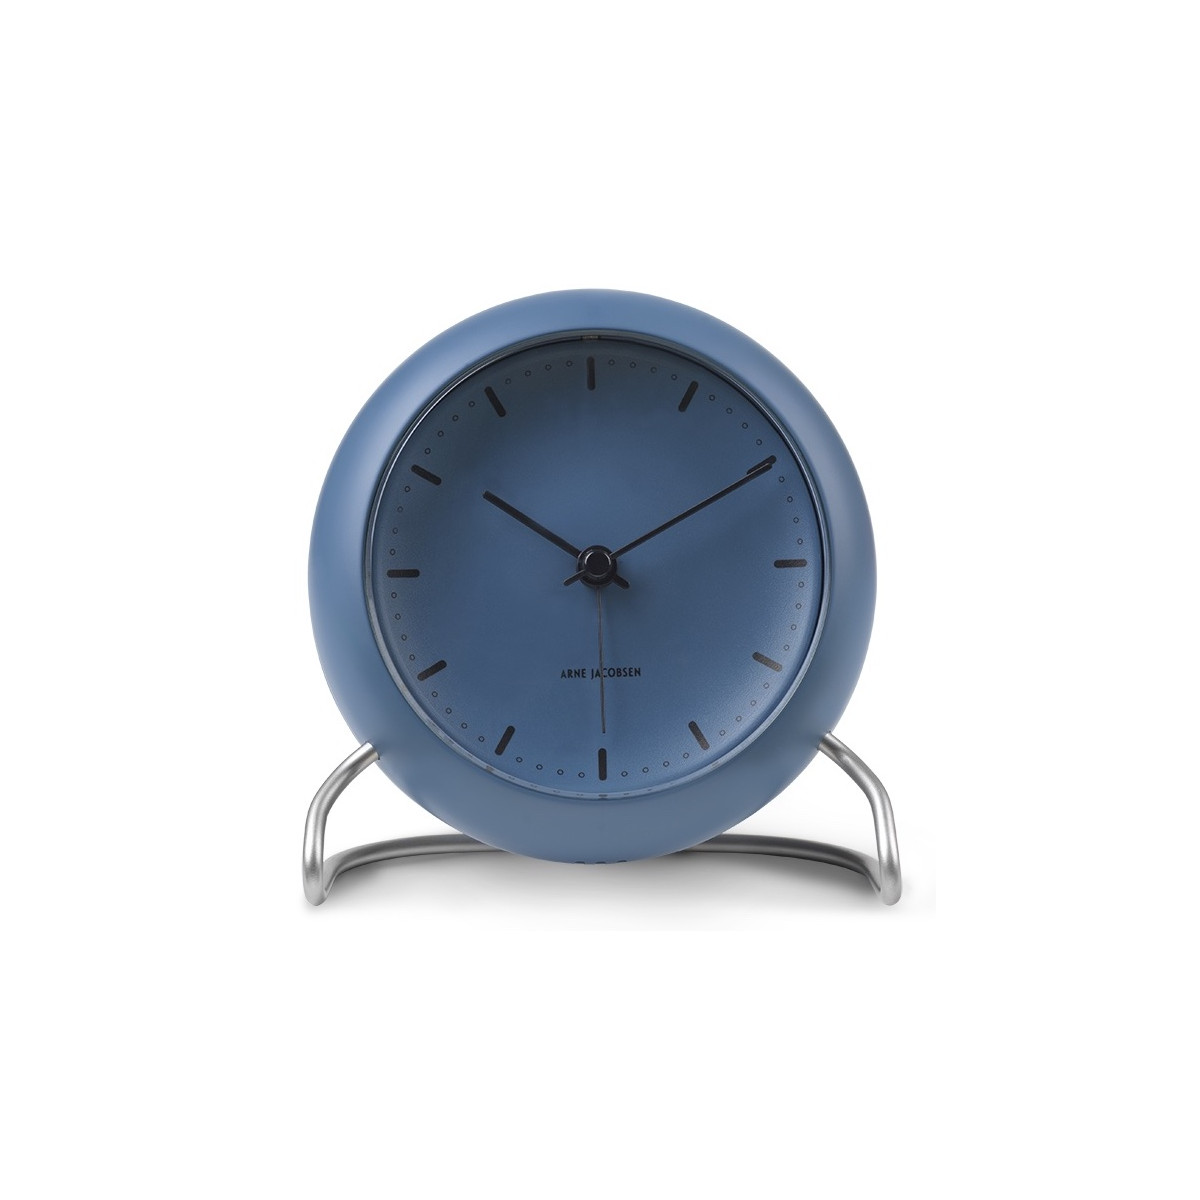 AJ City Hall alarm clock - blue - Arne Jacobsen